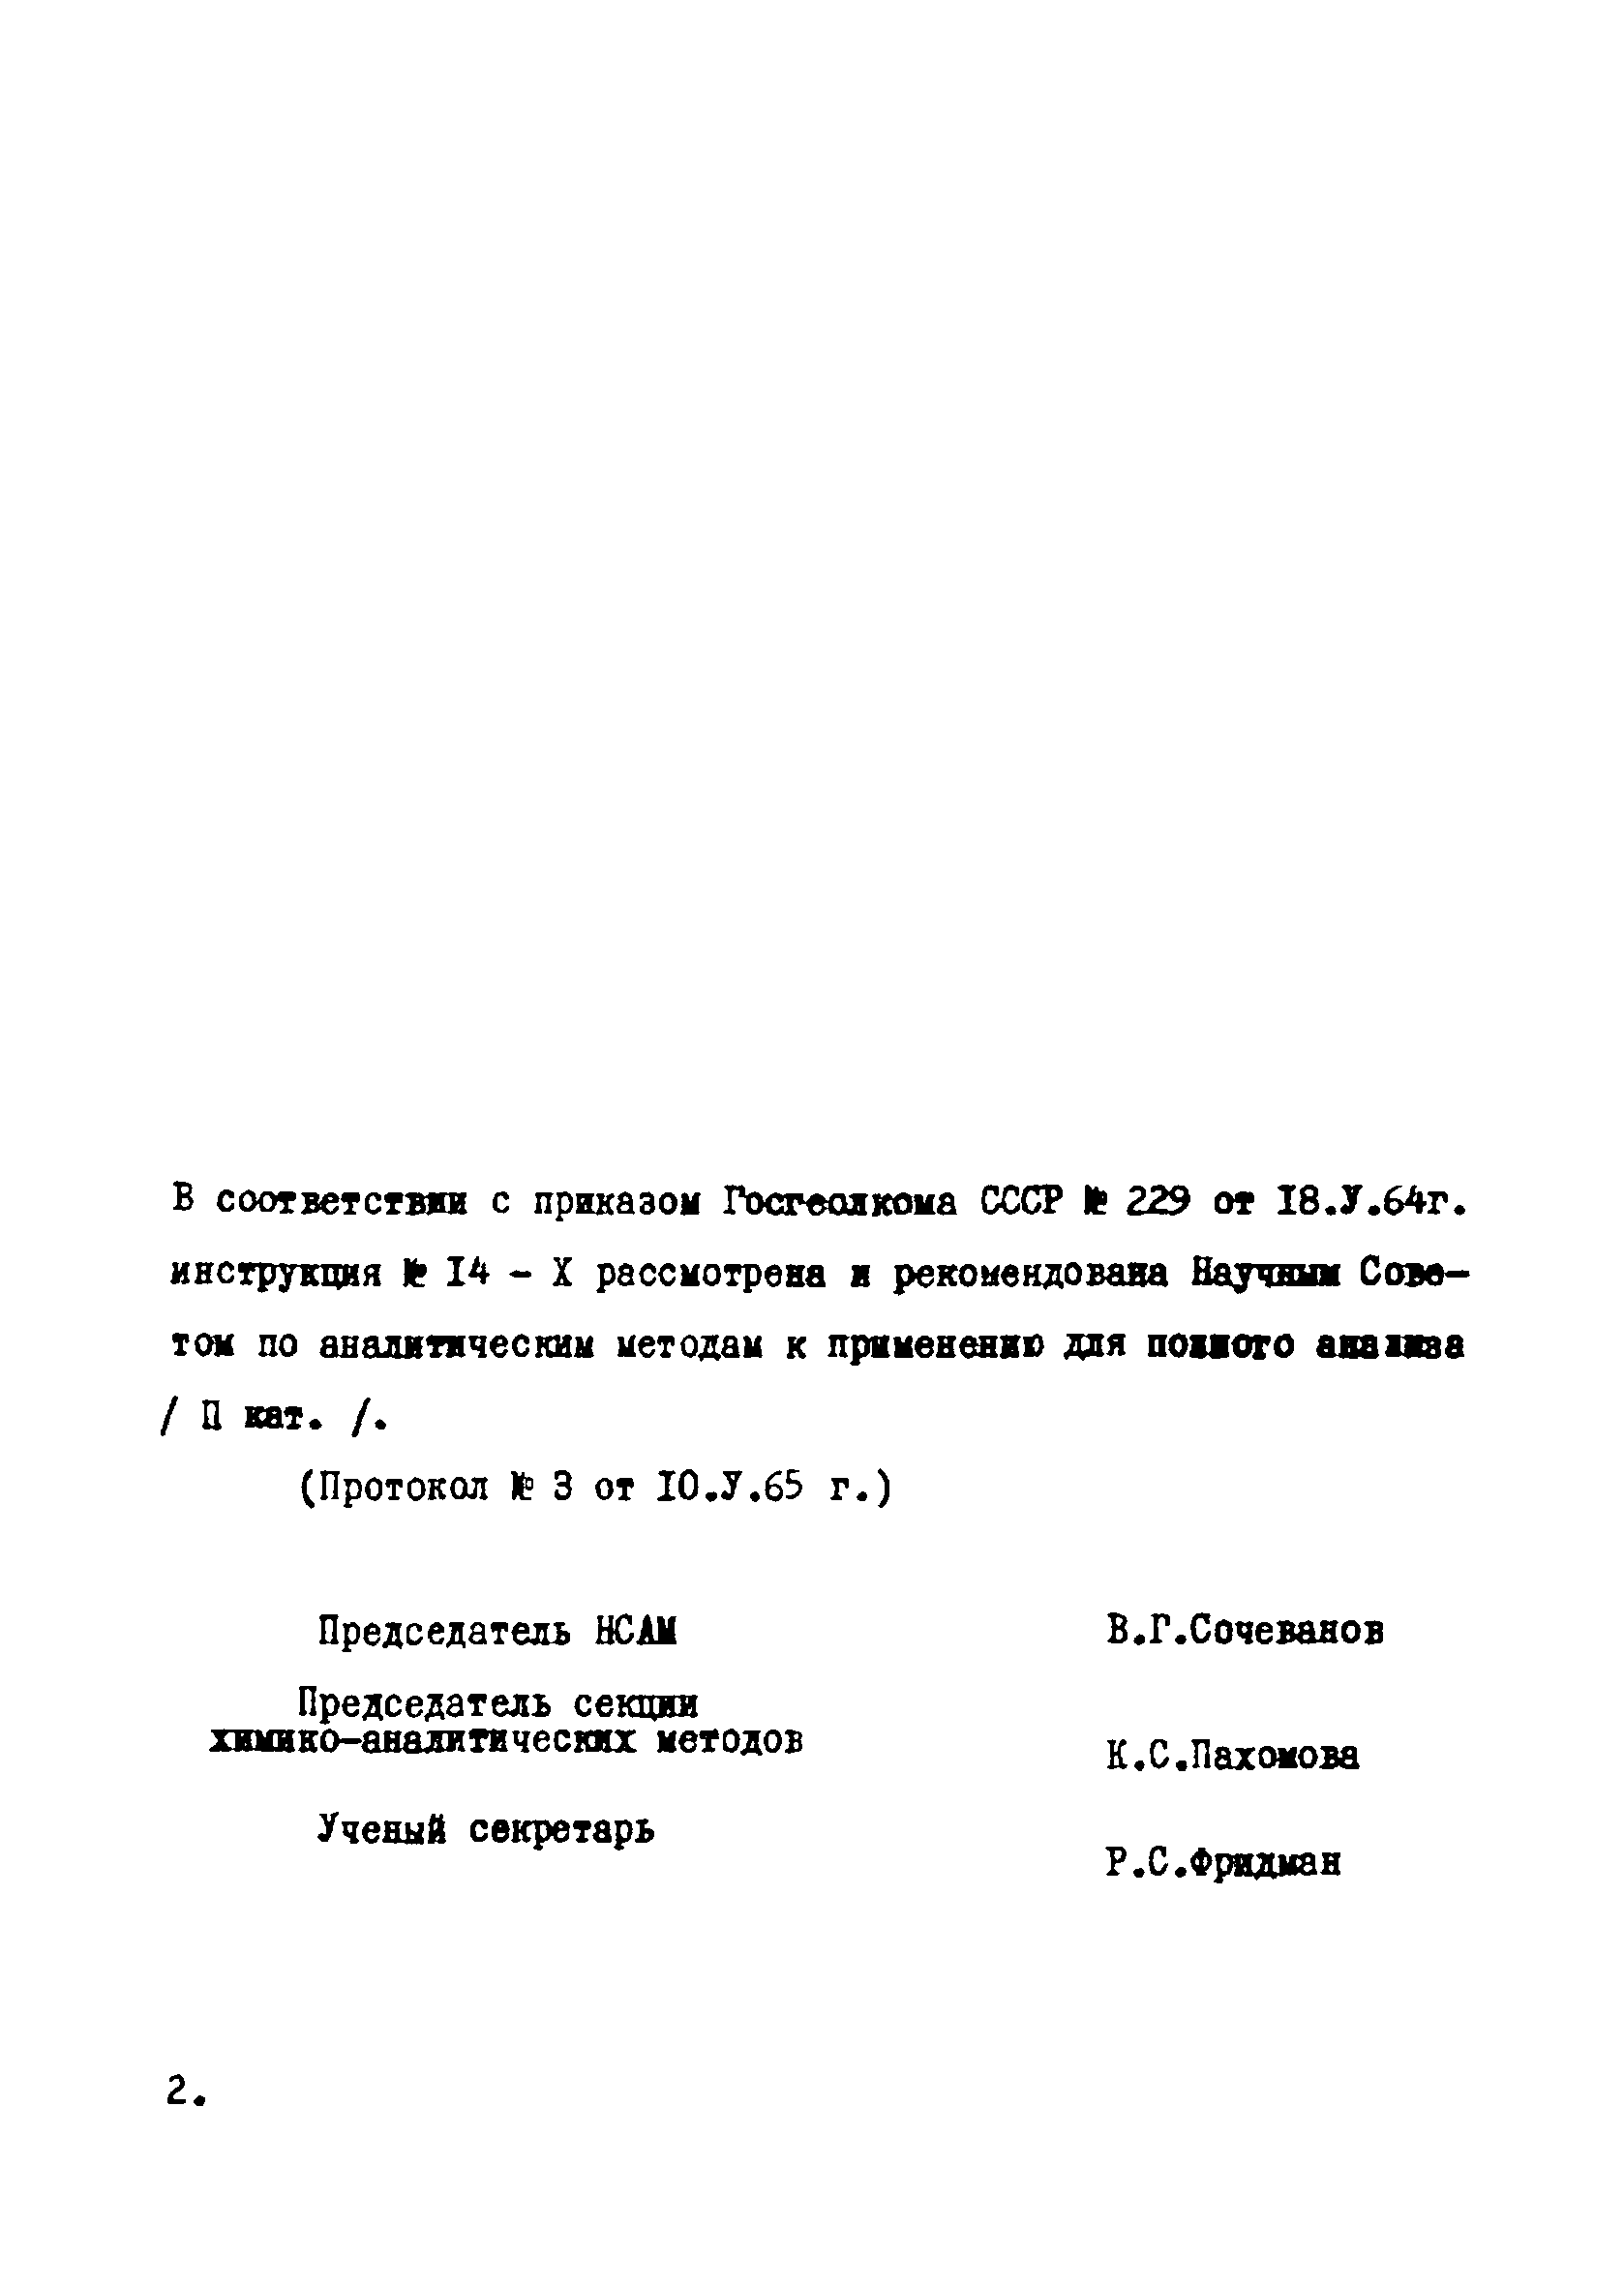 Инструкция НСАМ 14-Х